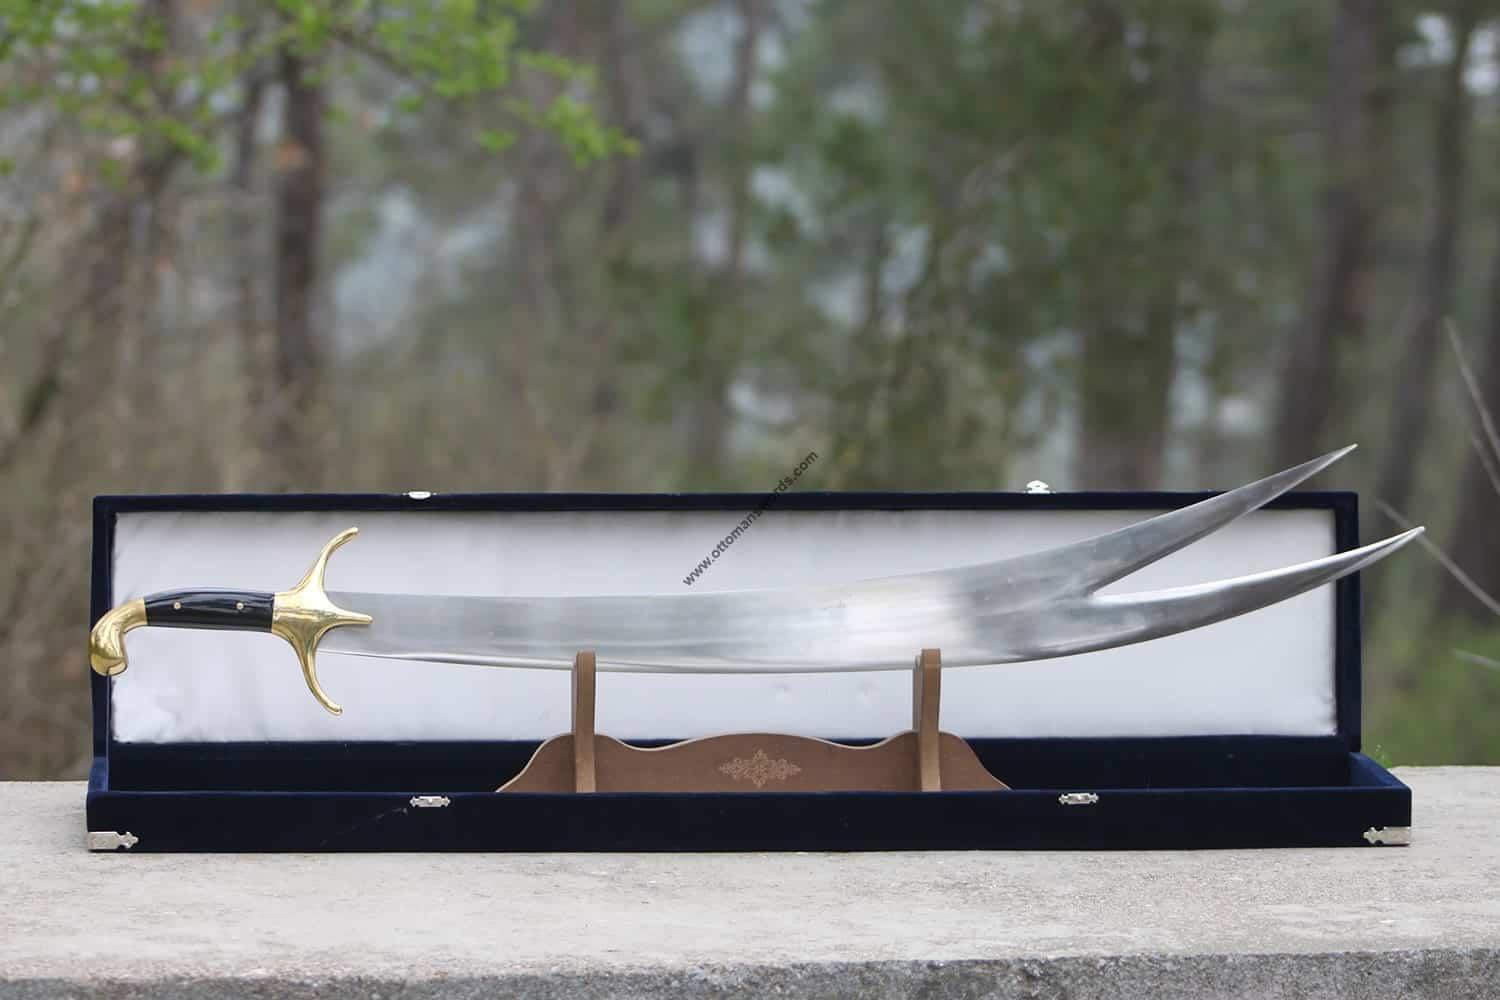 zulfiqar sword for sale